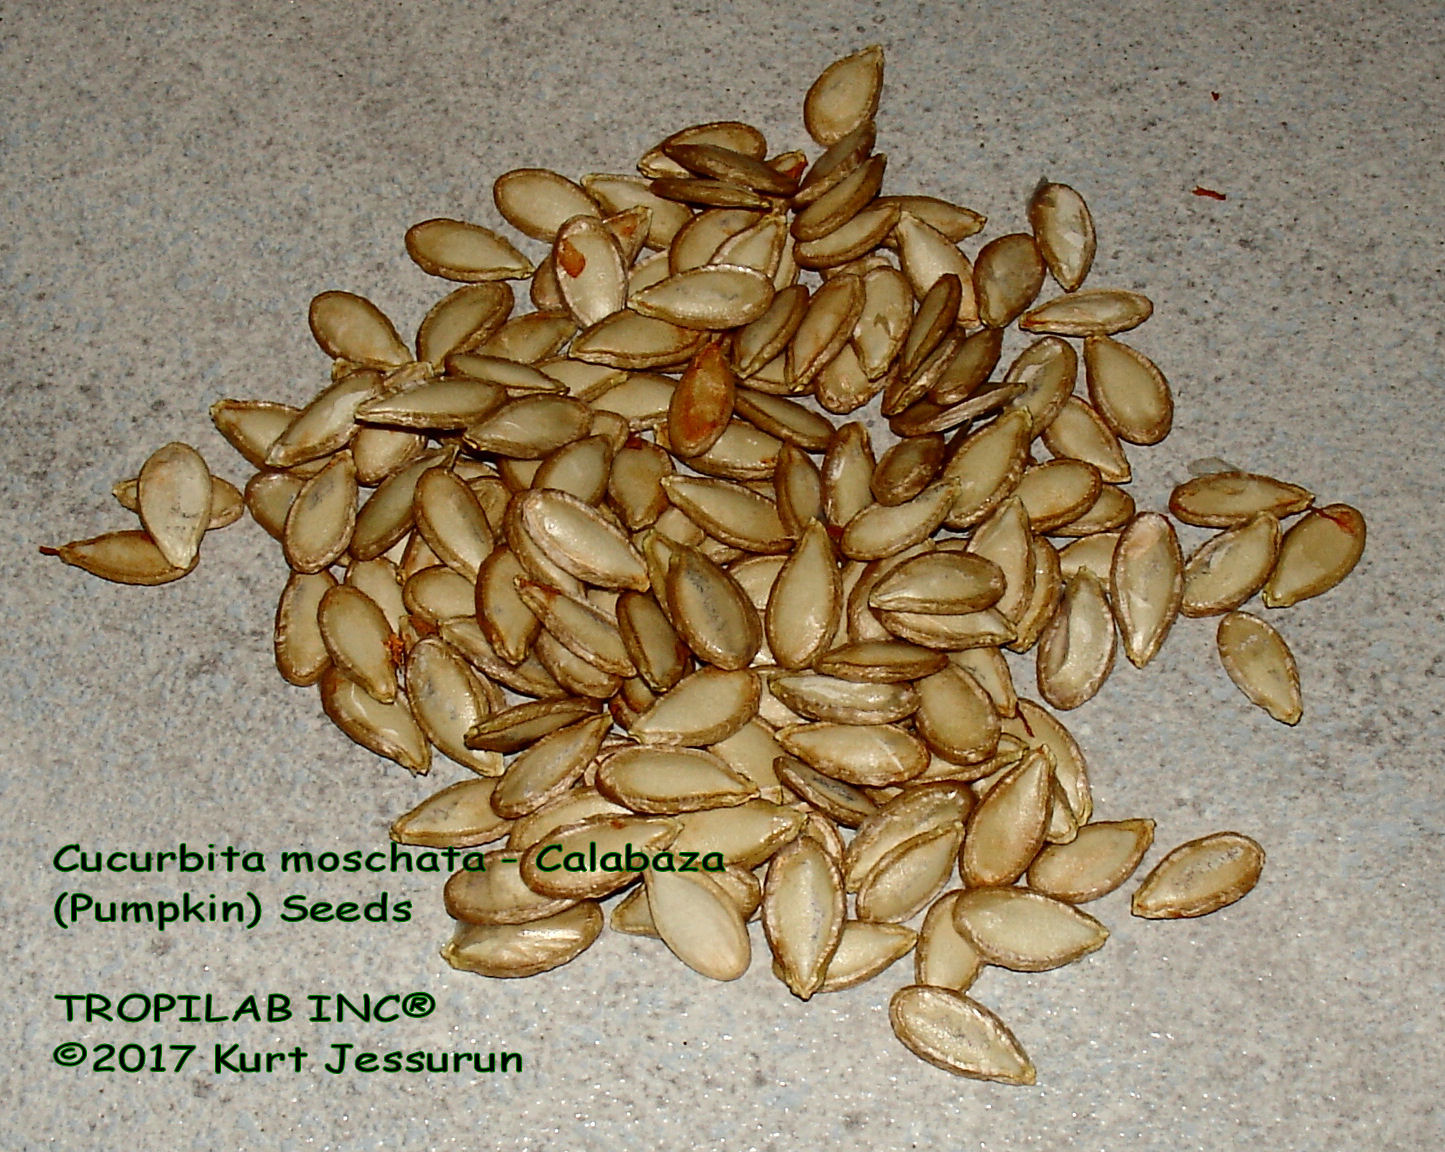 Cucurbita moschata (Calabaza) seeds (Tropilab)